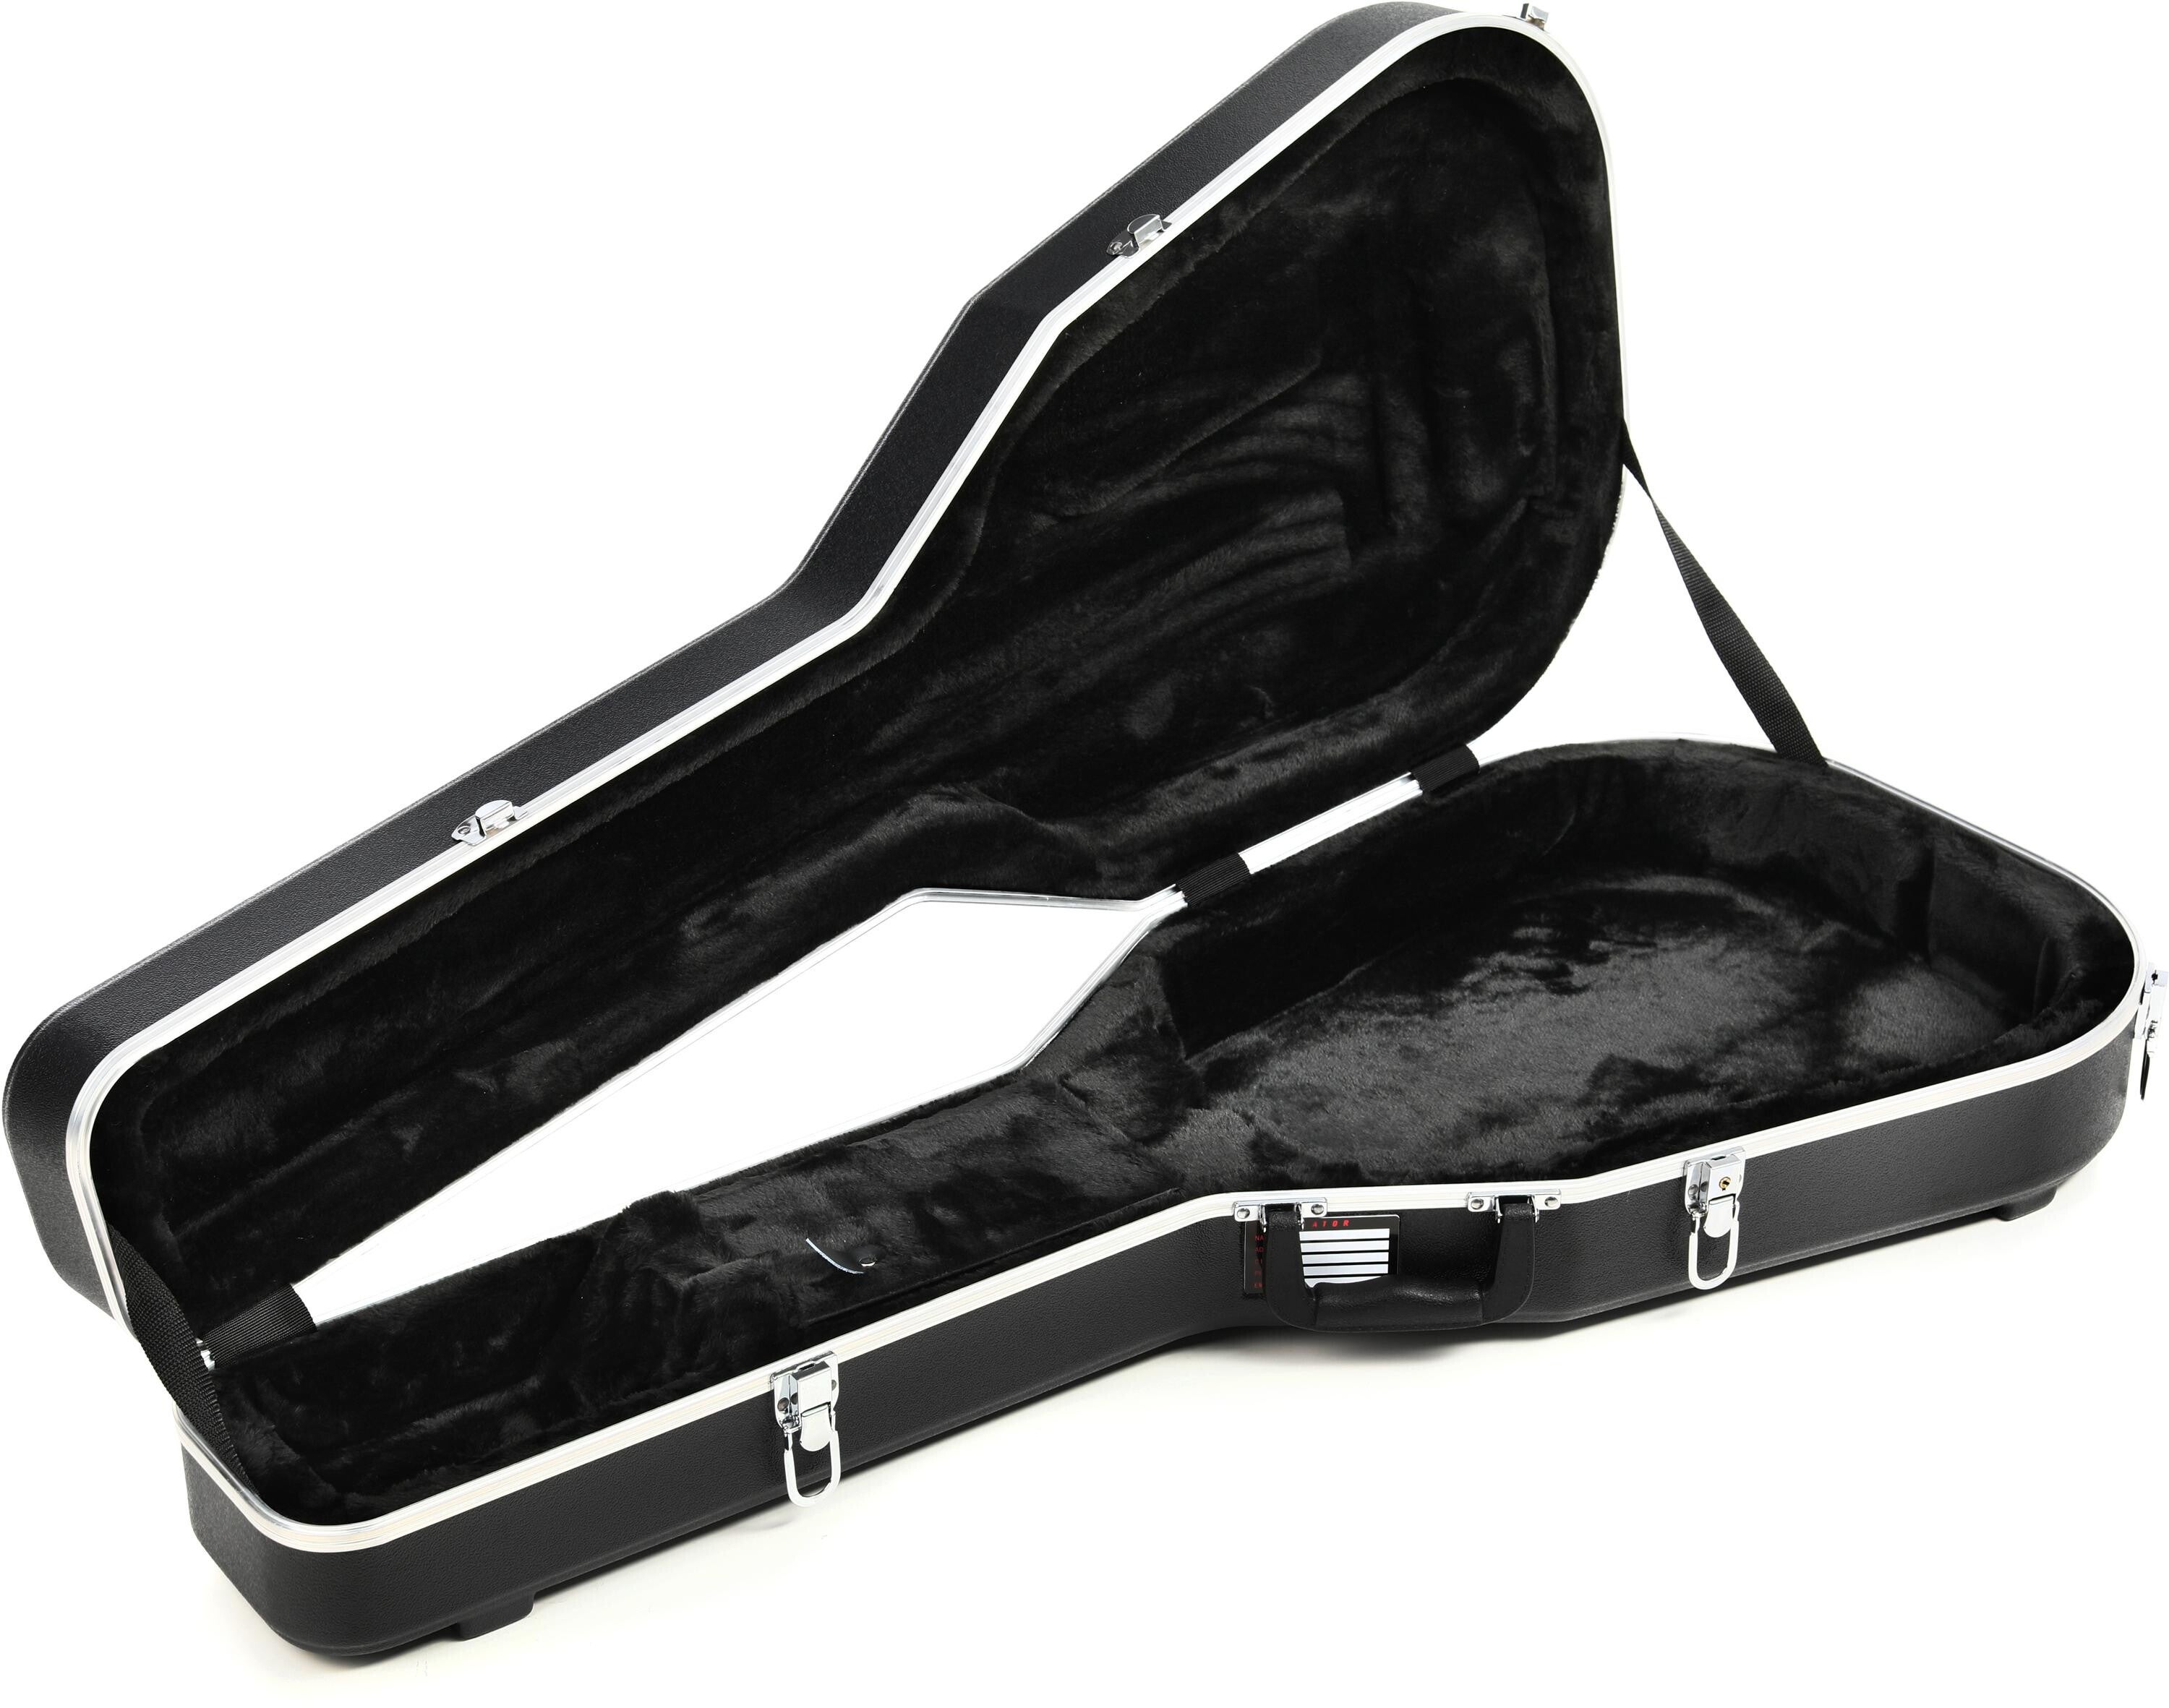 Bundled Item: Gator Deluxe ABS Molded Acoustic Guitar Case - Black